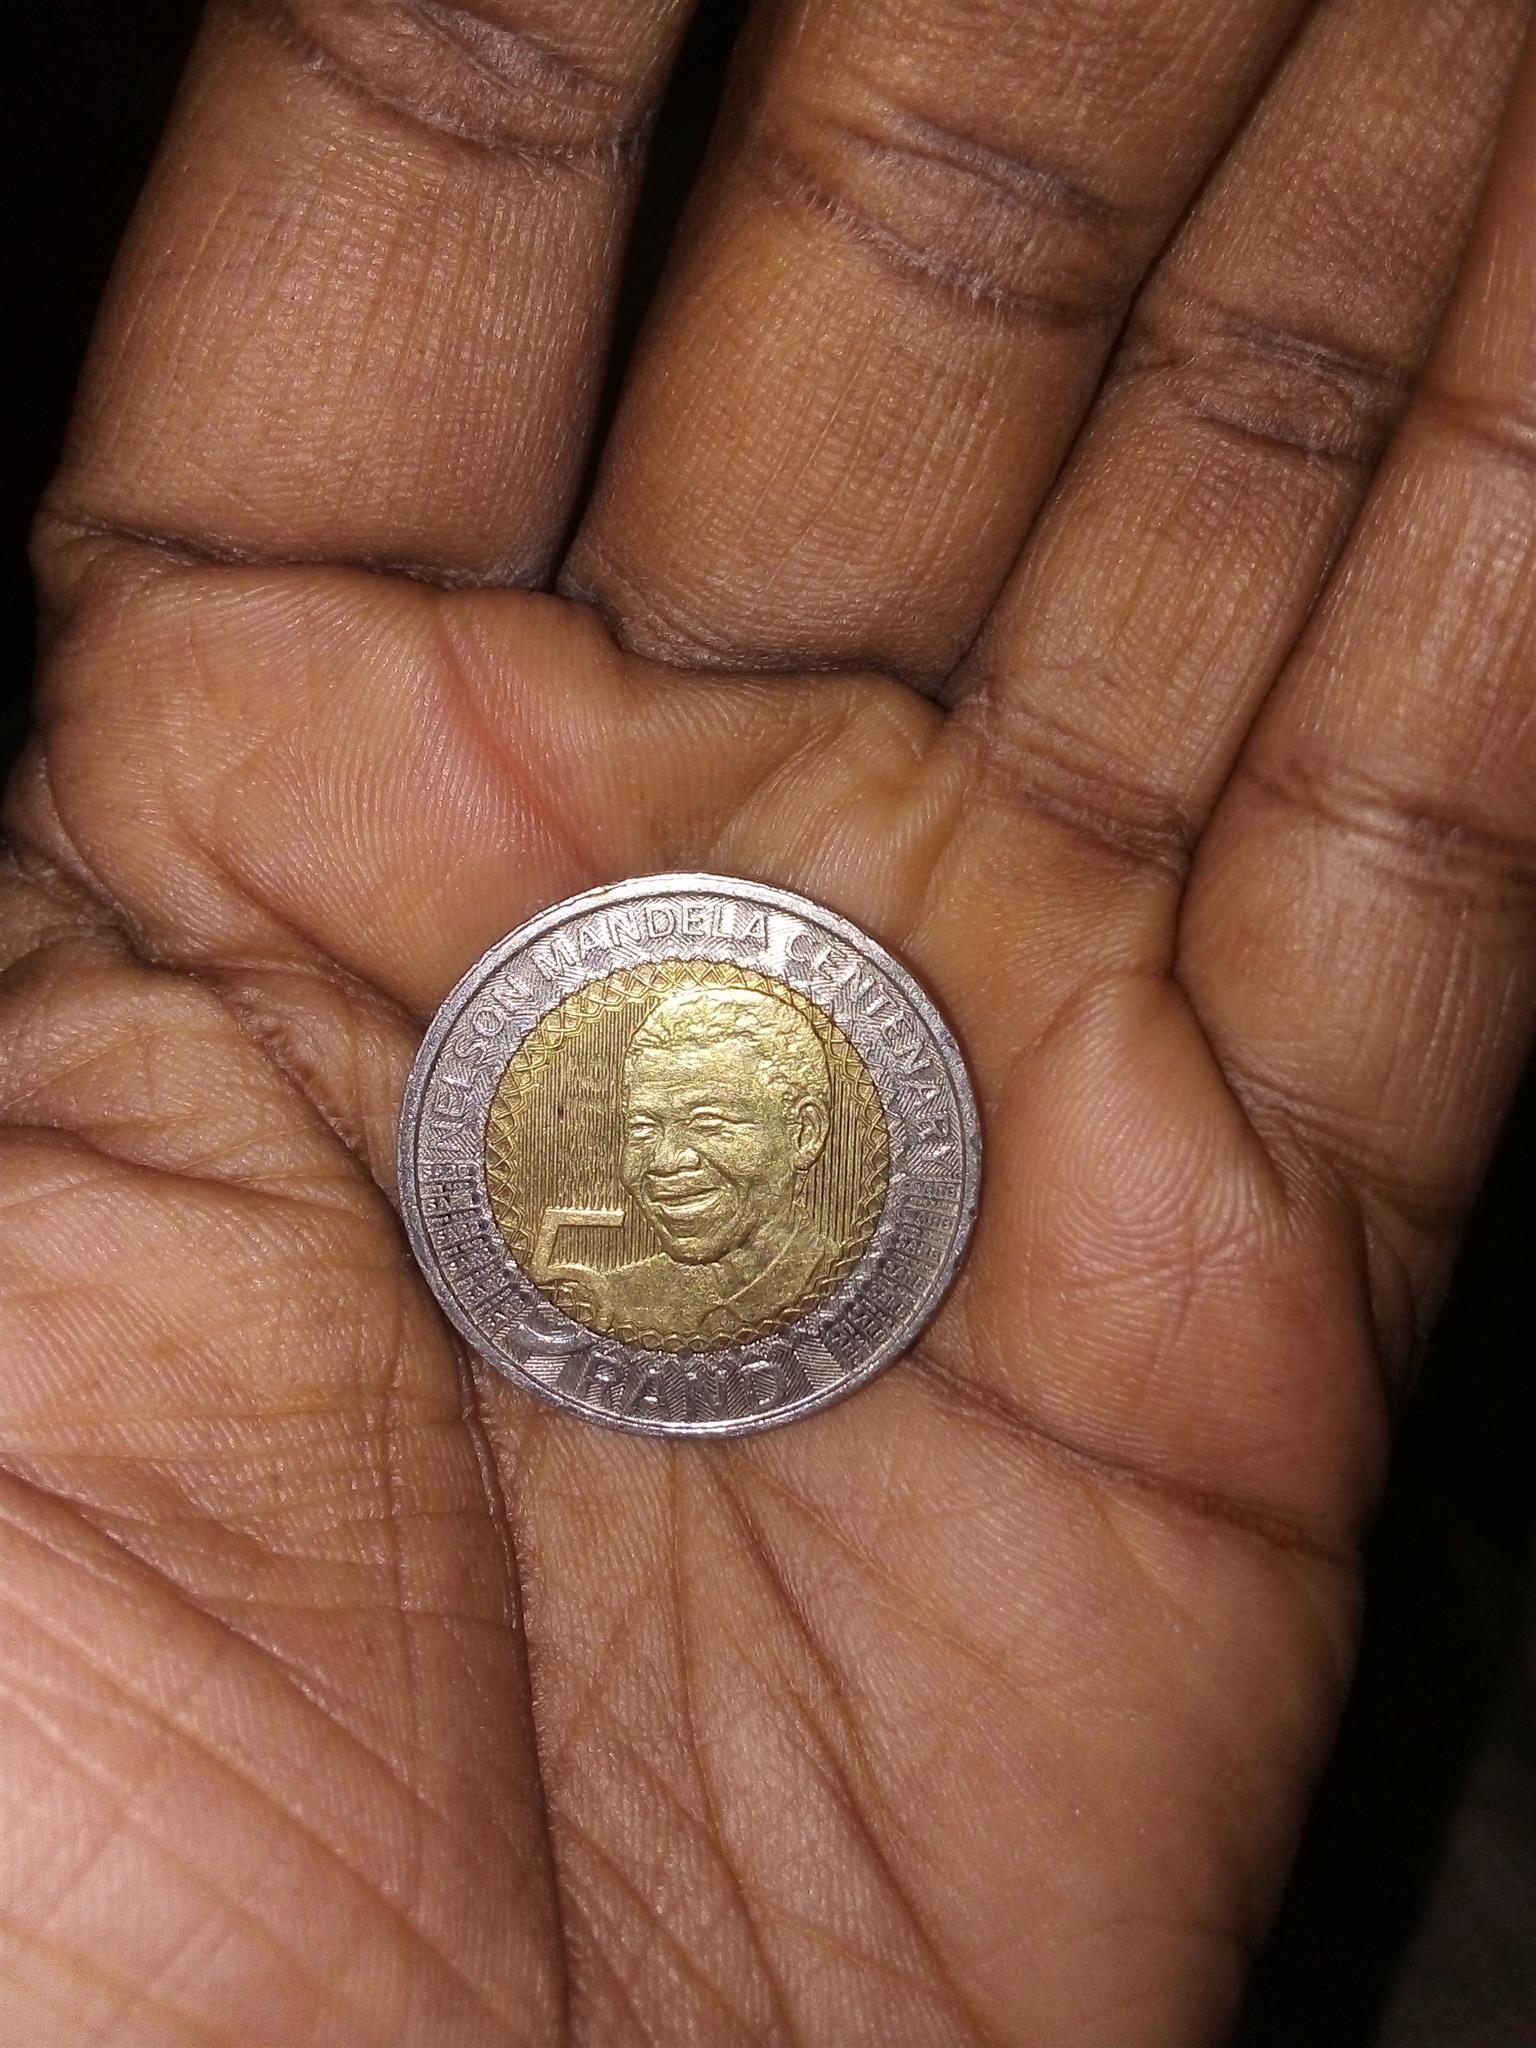 Mandela 2018 R5 Coin